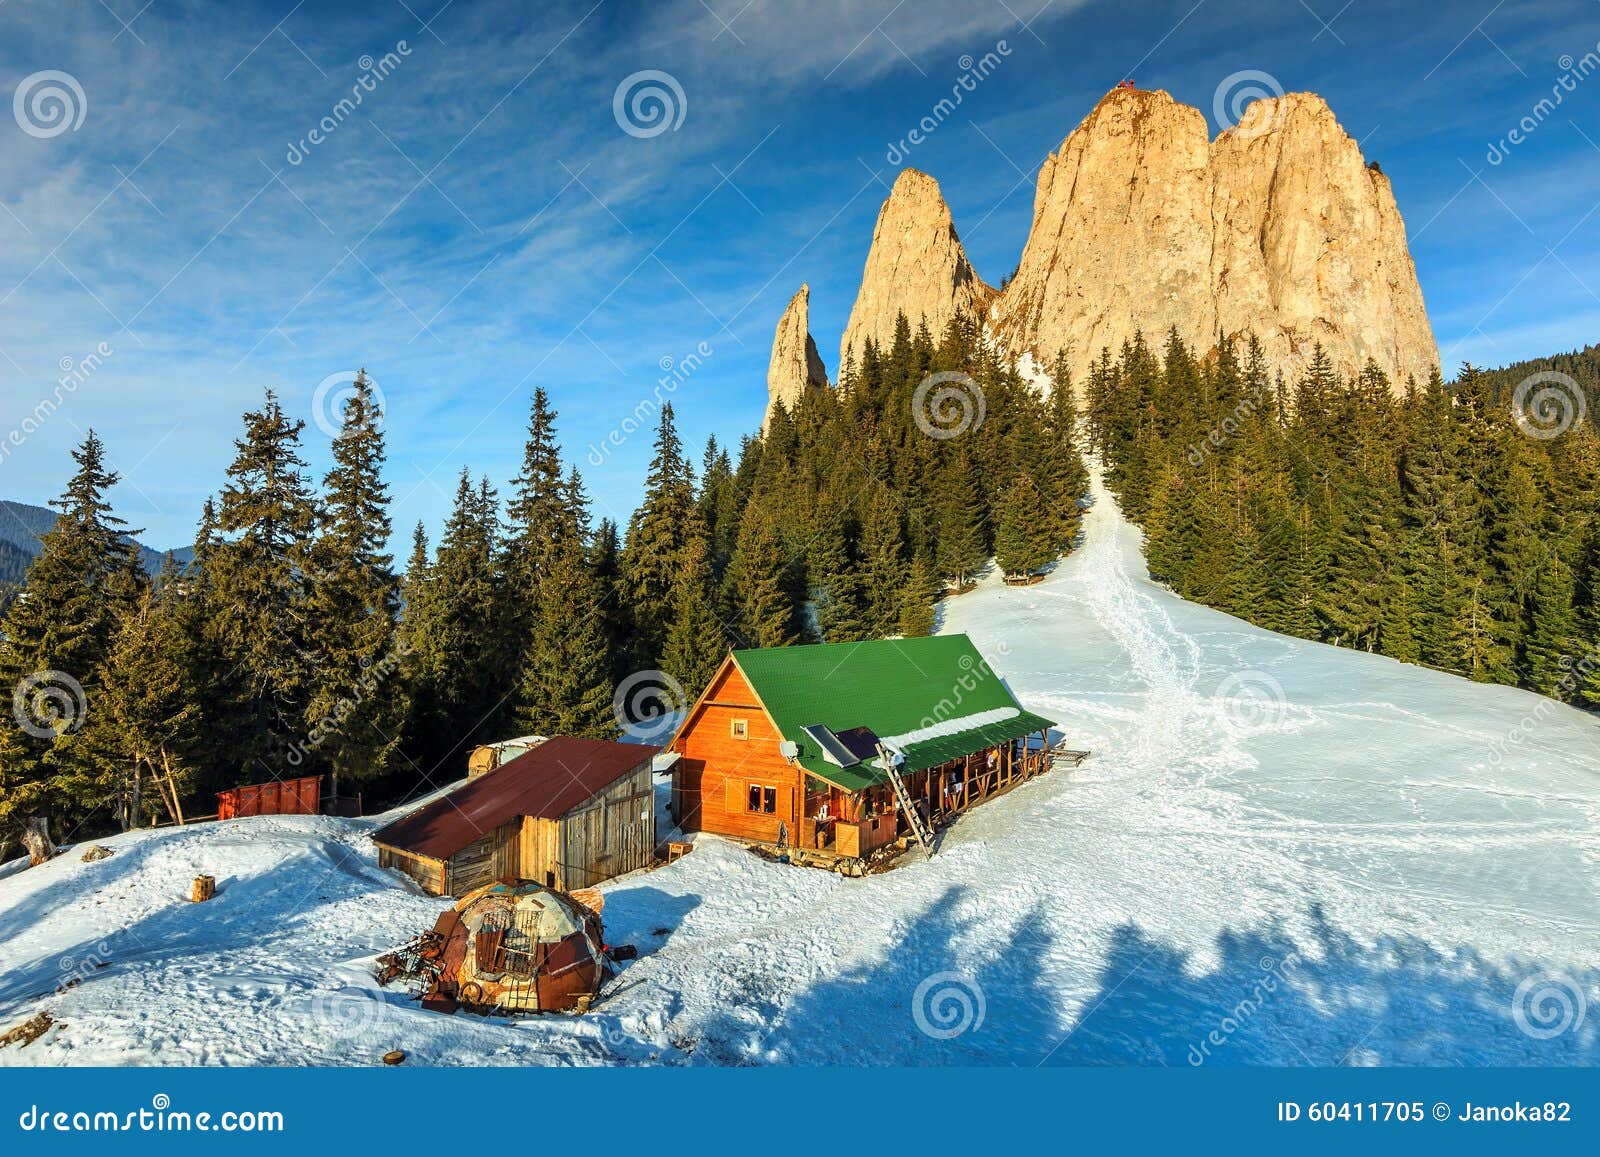 wooden shelter in mountains,carpathians,transylvania,romania,europe